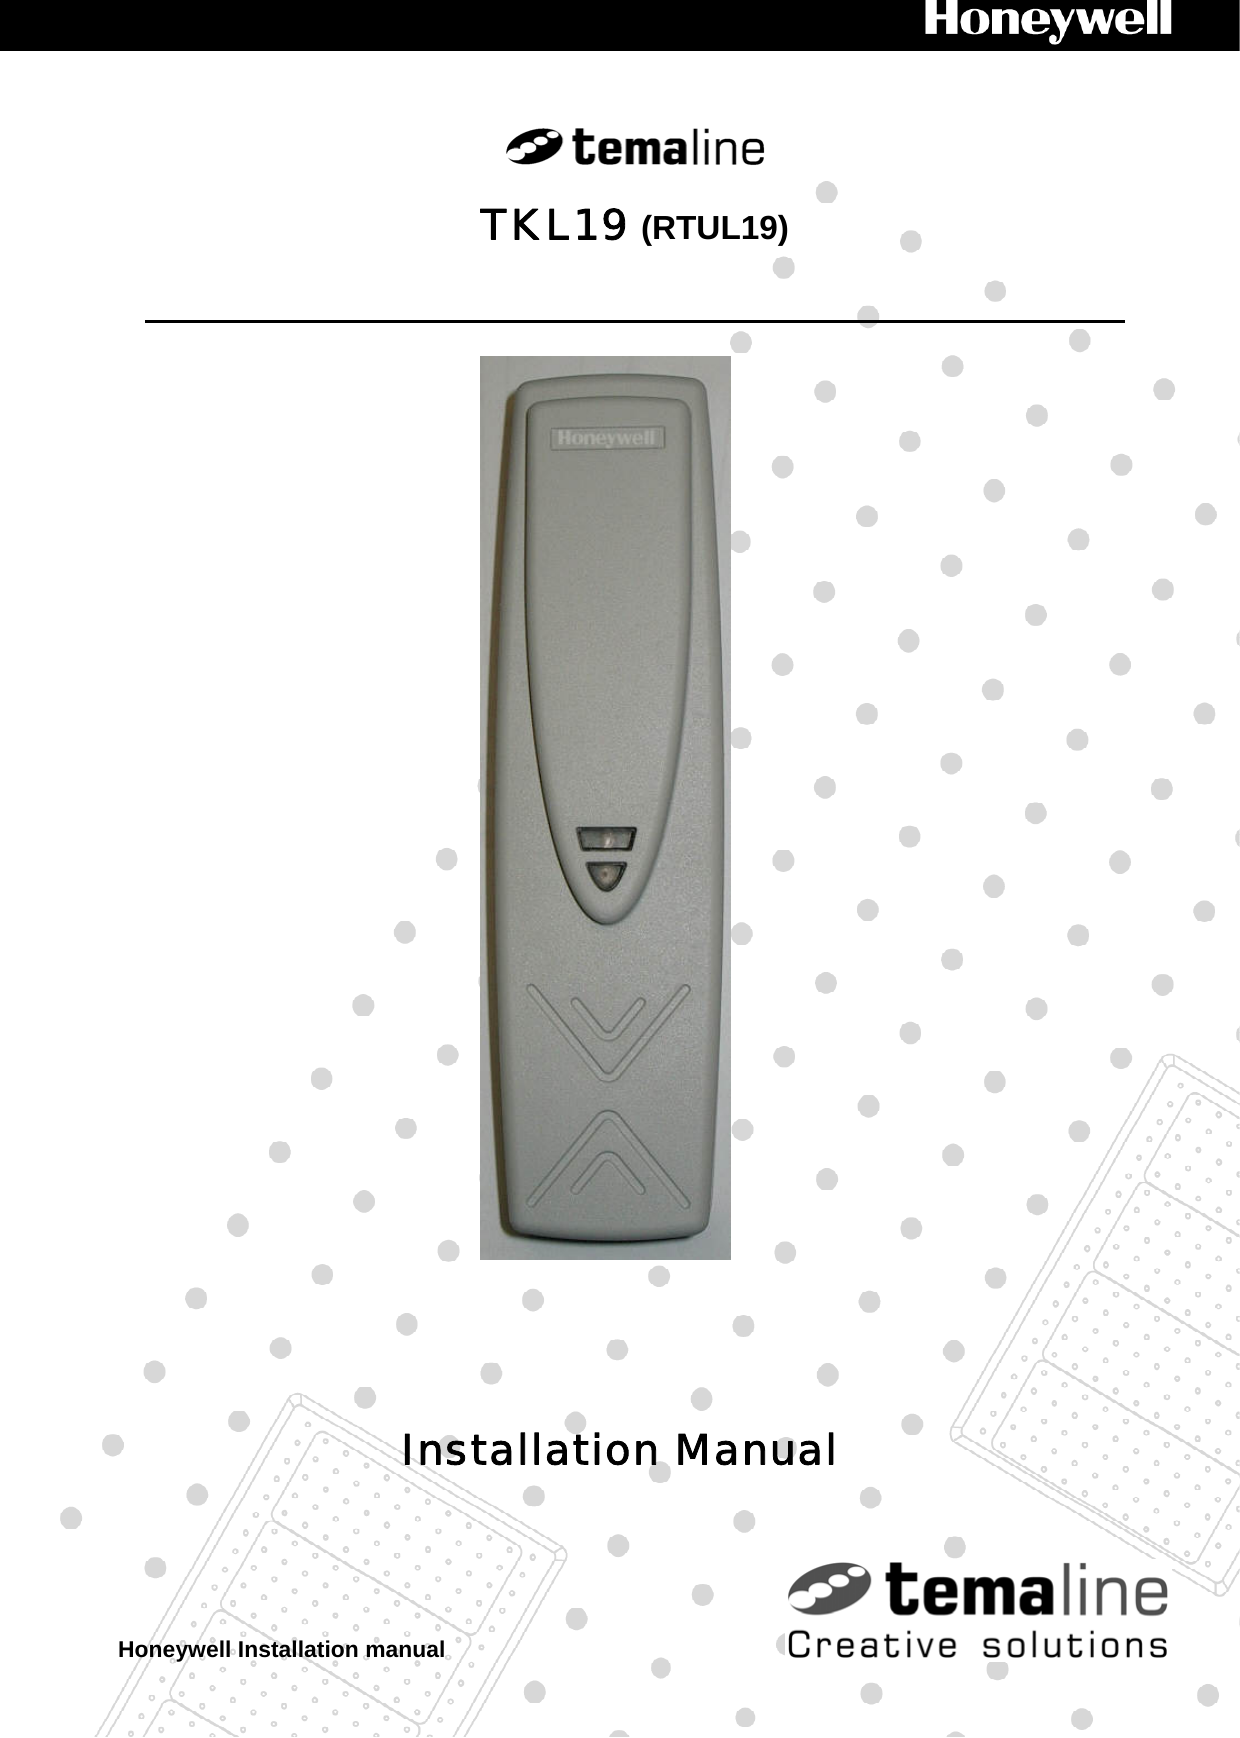   TKL19  (RTUL19)       Installation Manual Honeywell Installation manual   Pagina 1 di 25 